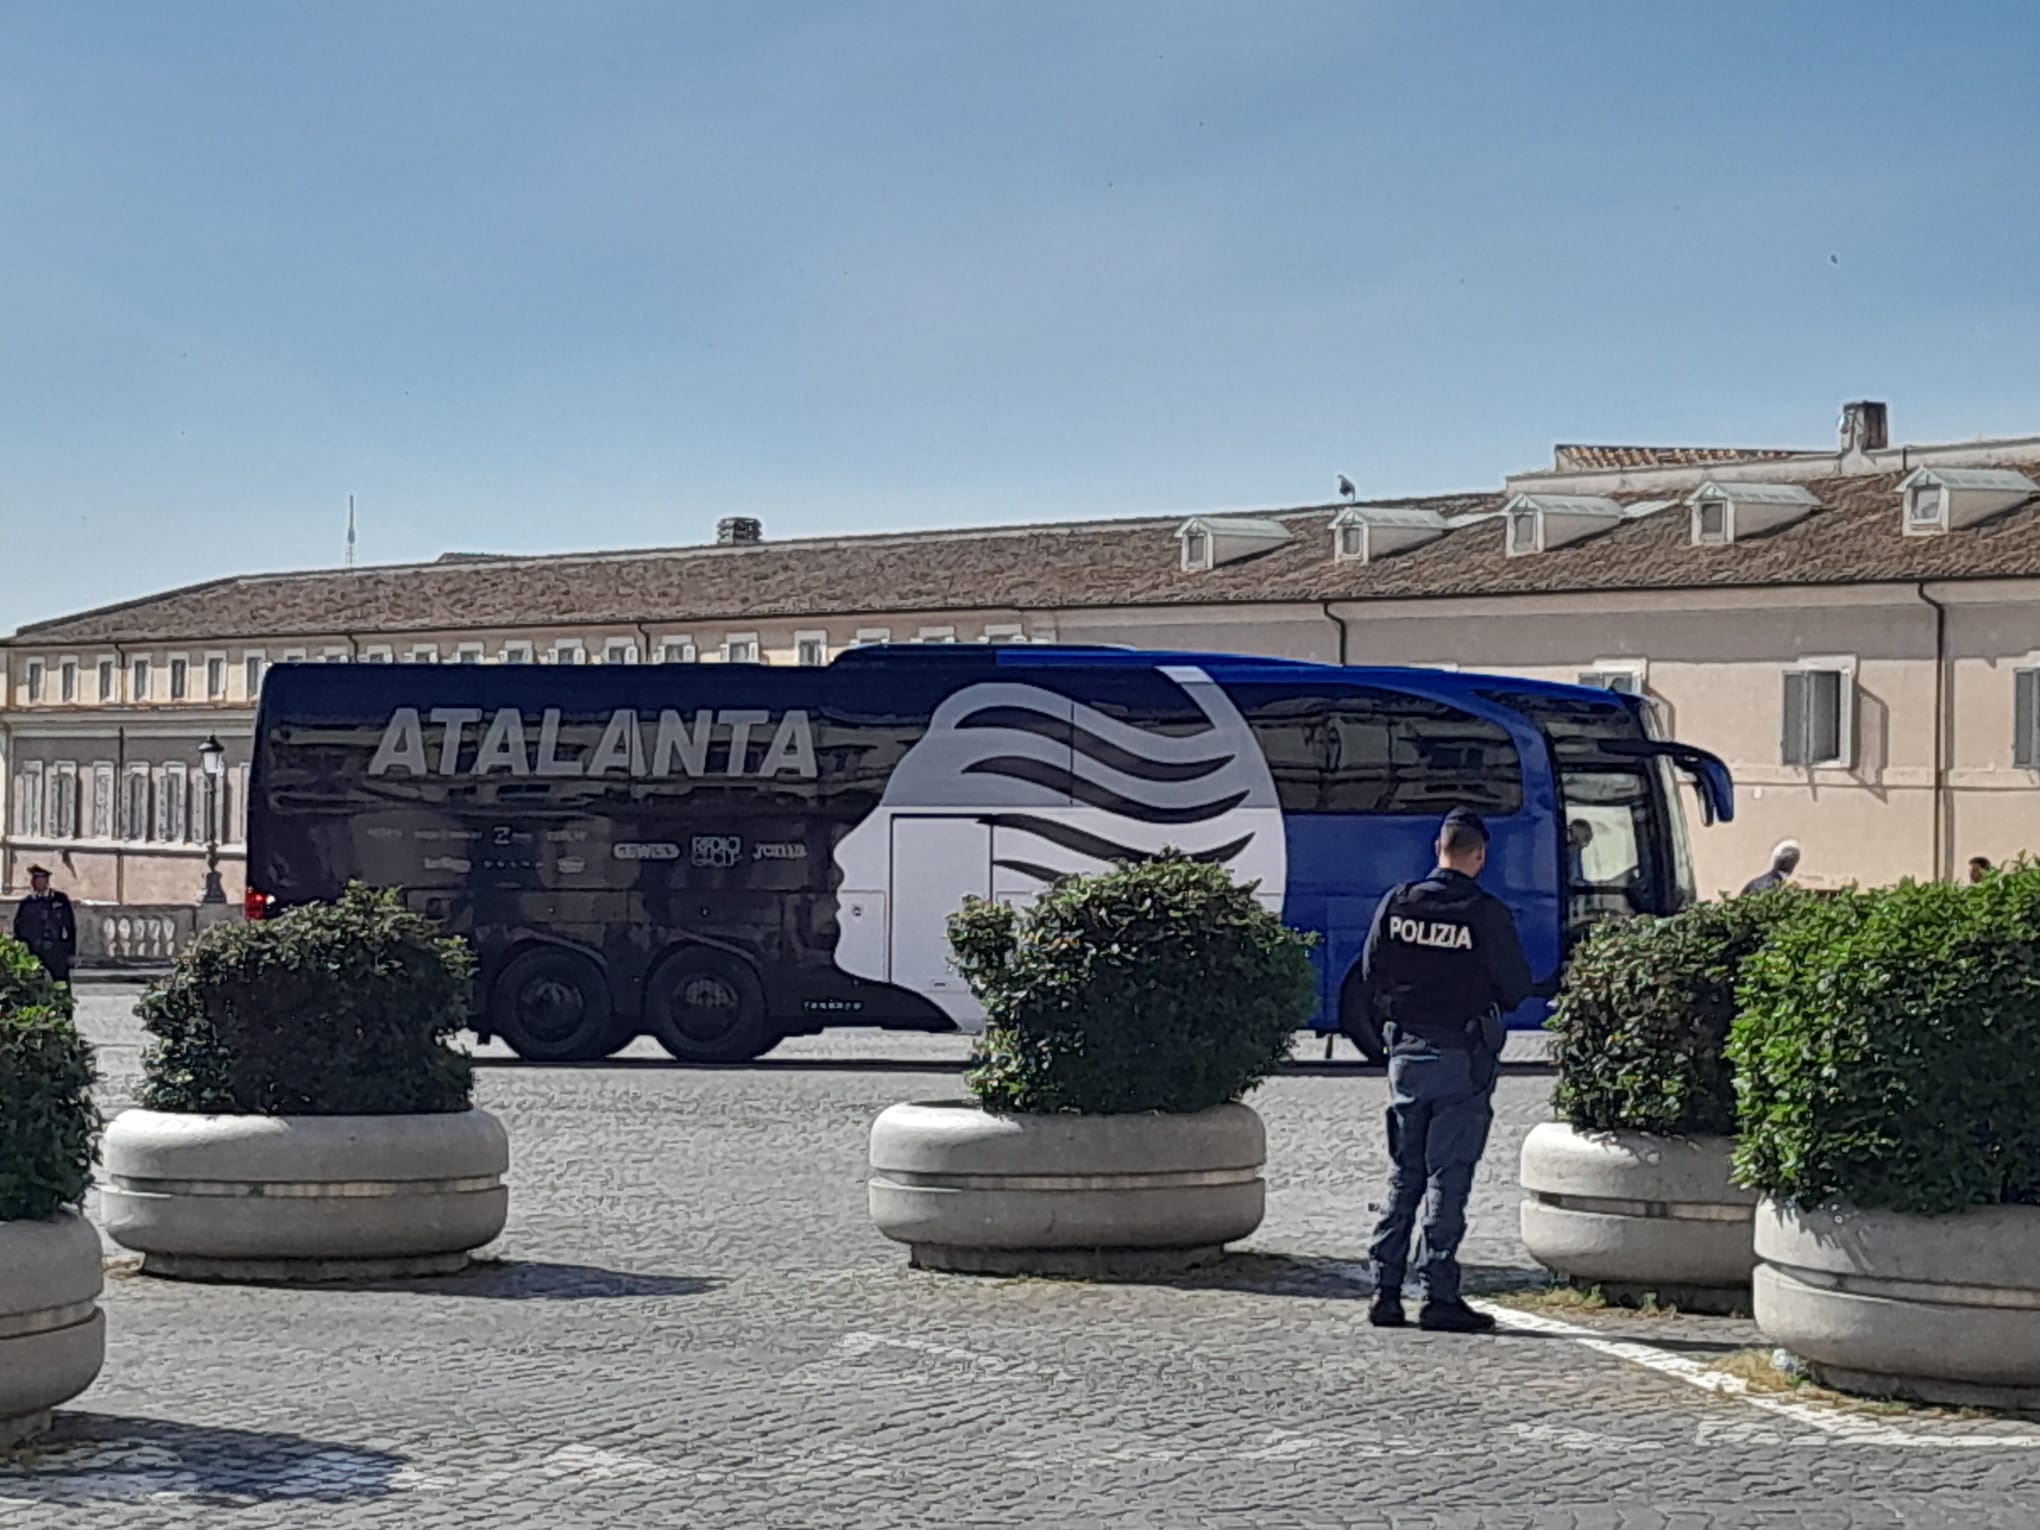 Atalanta Juve, l’arrivo dei nerazzurri al Quirinale – VIDEO